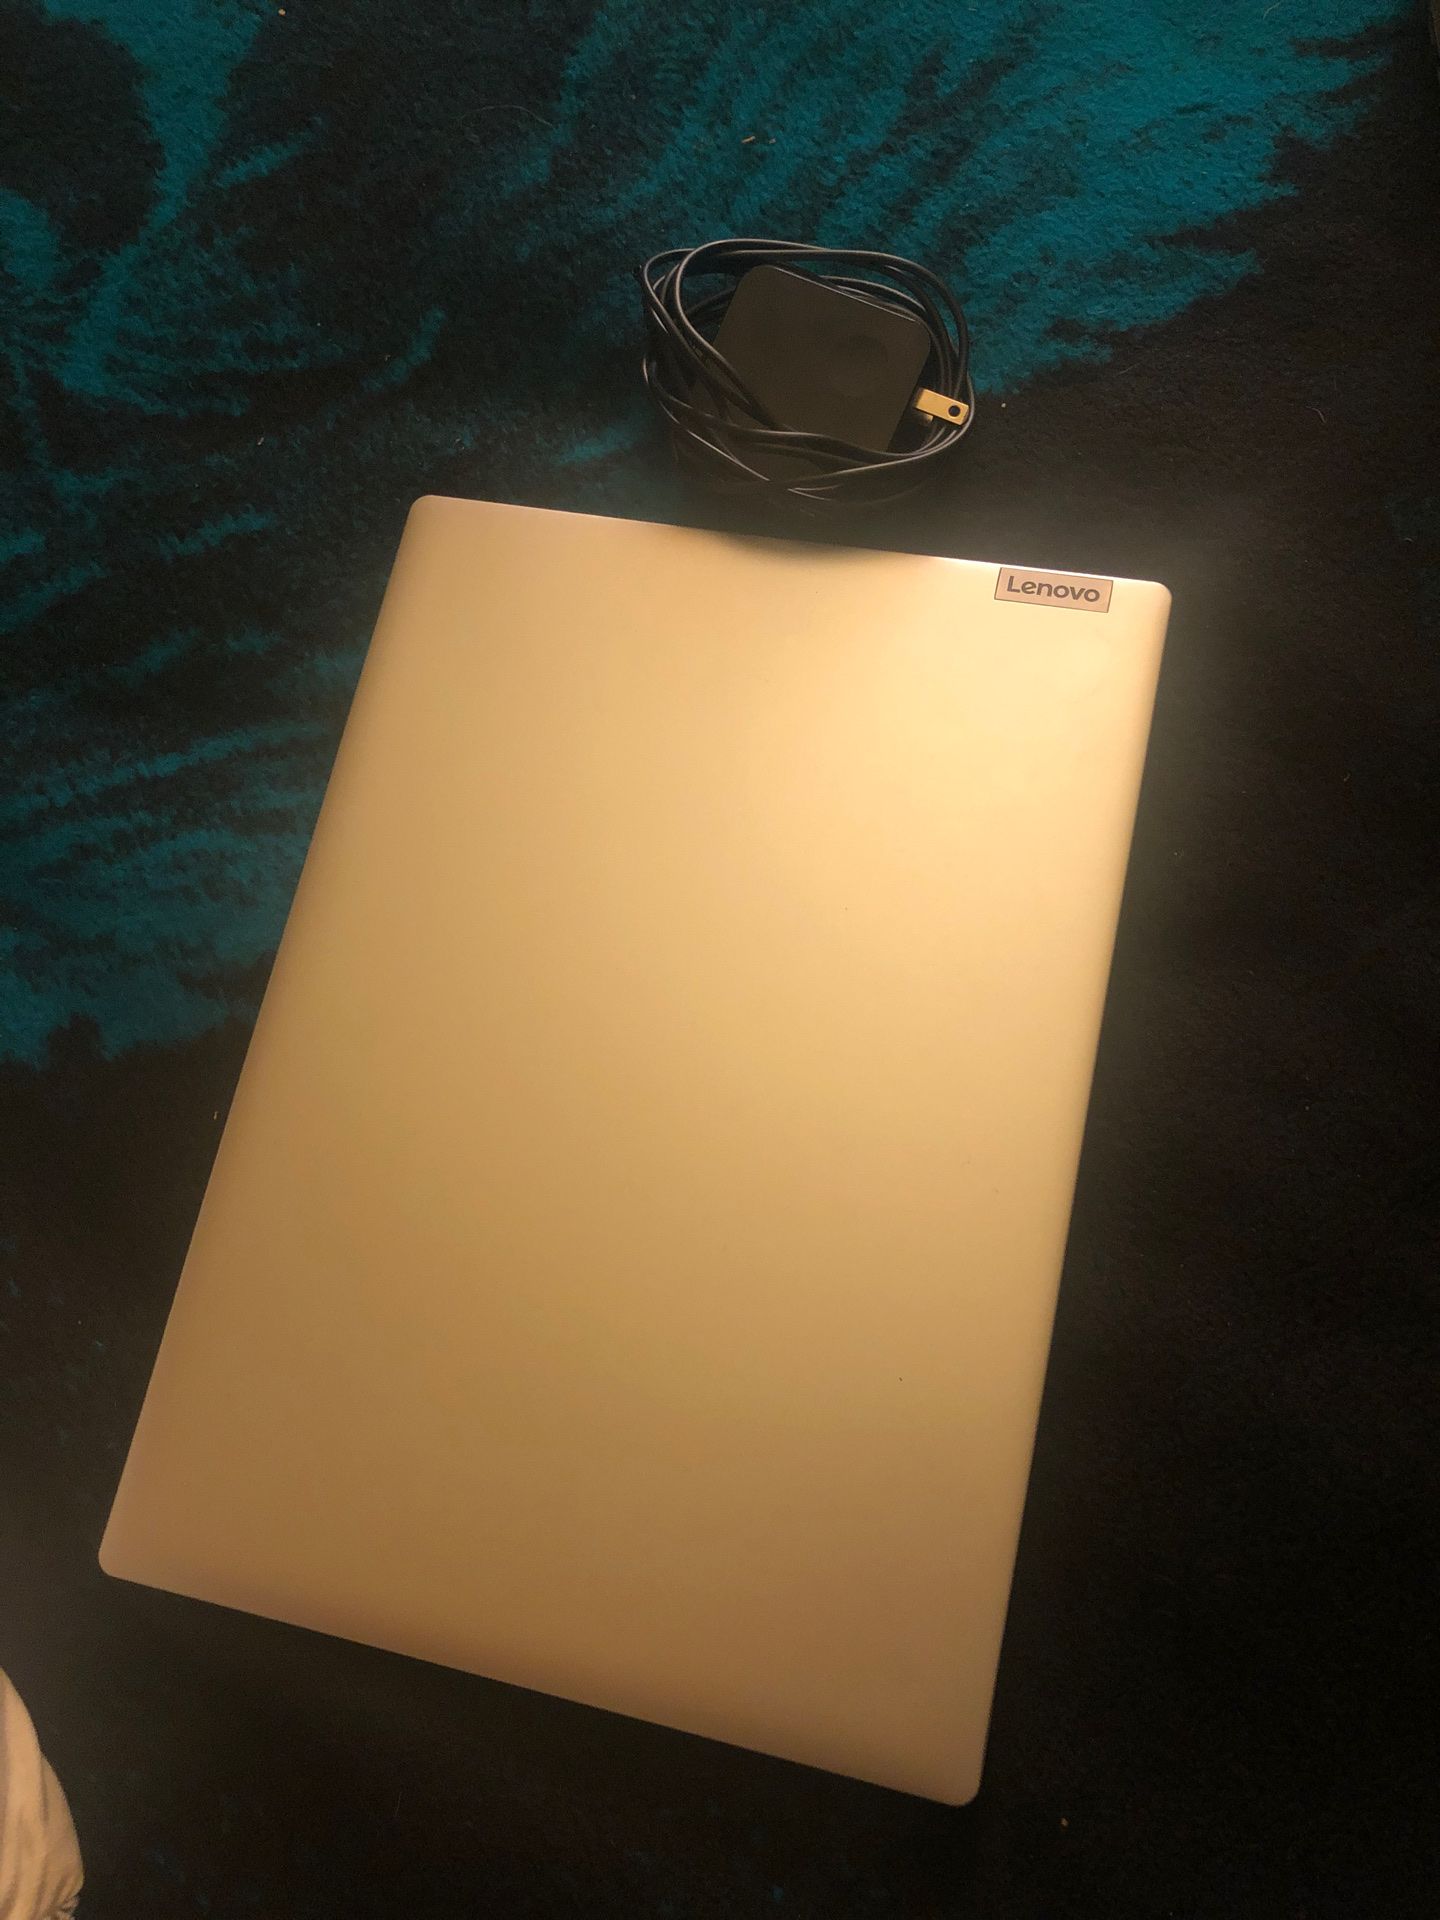 Lenovo idea pad laptop